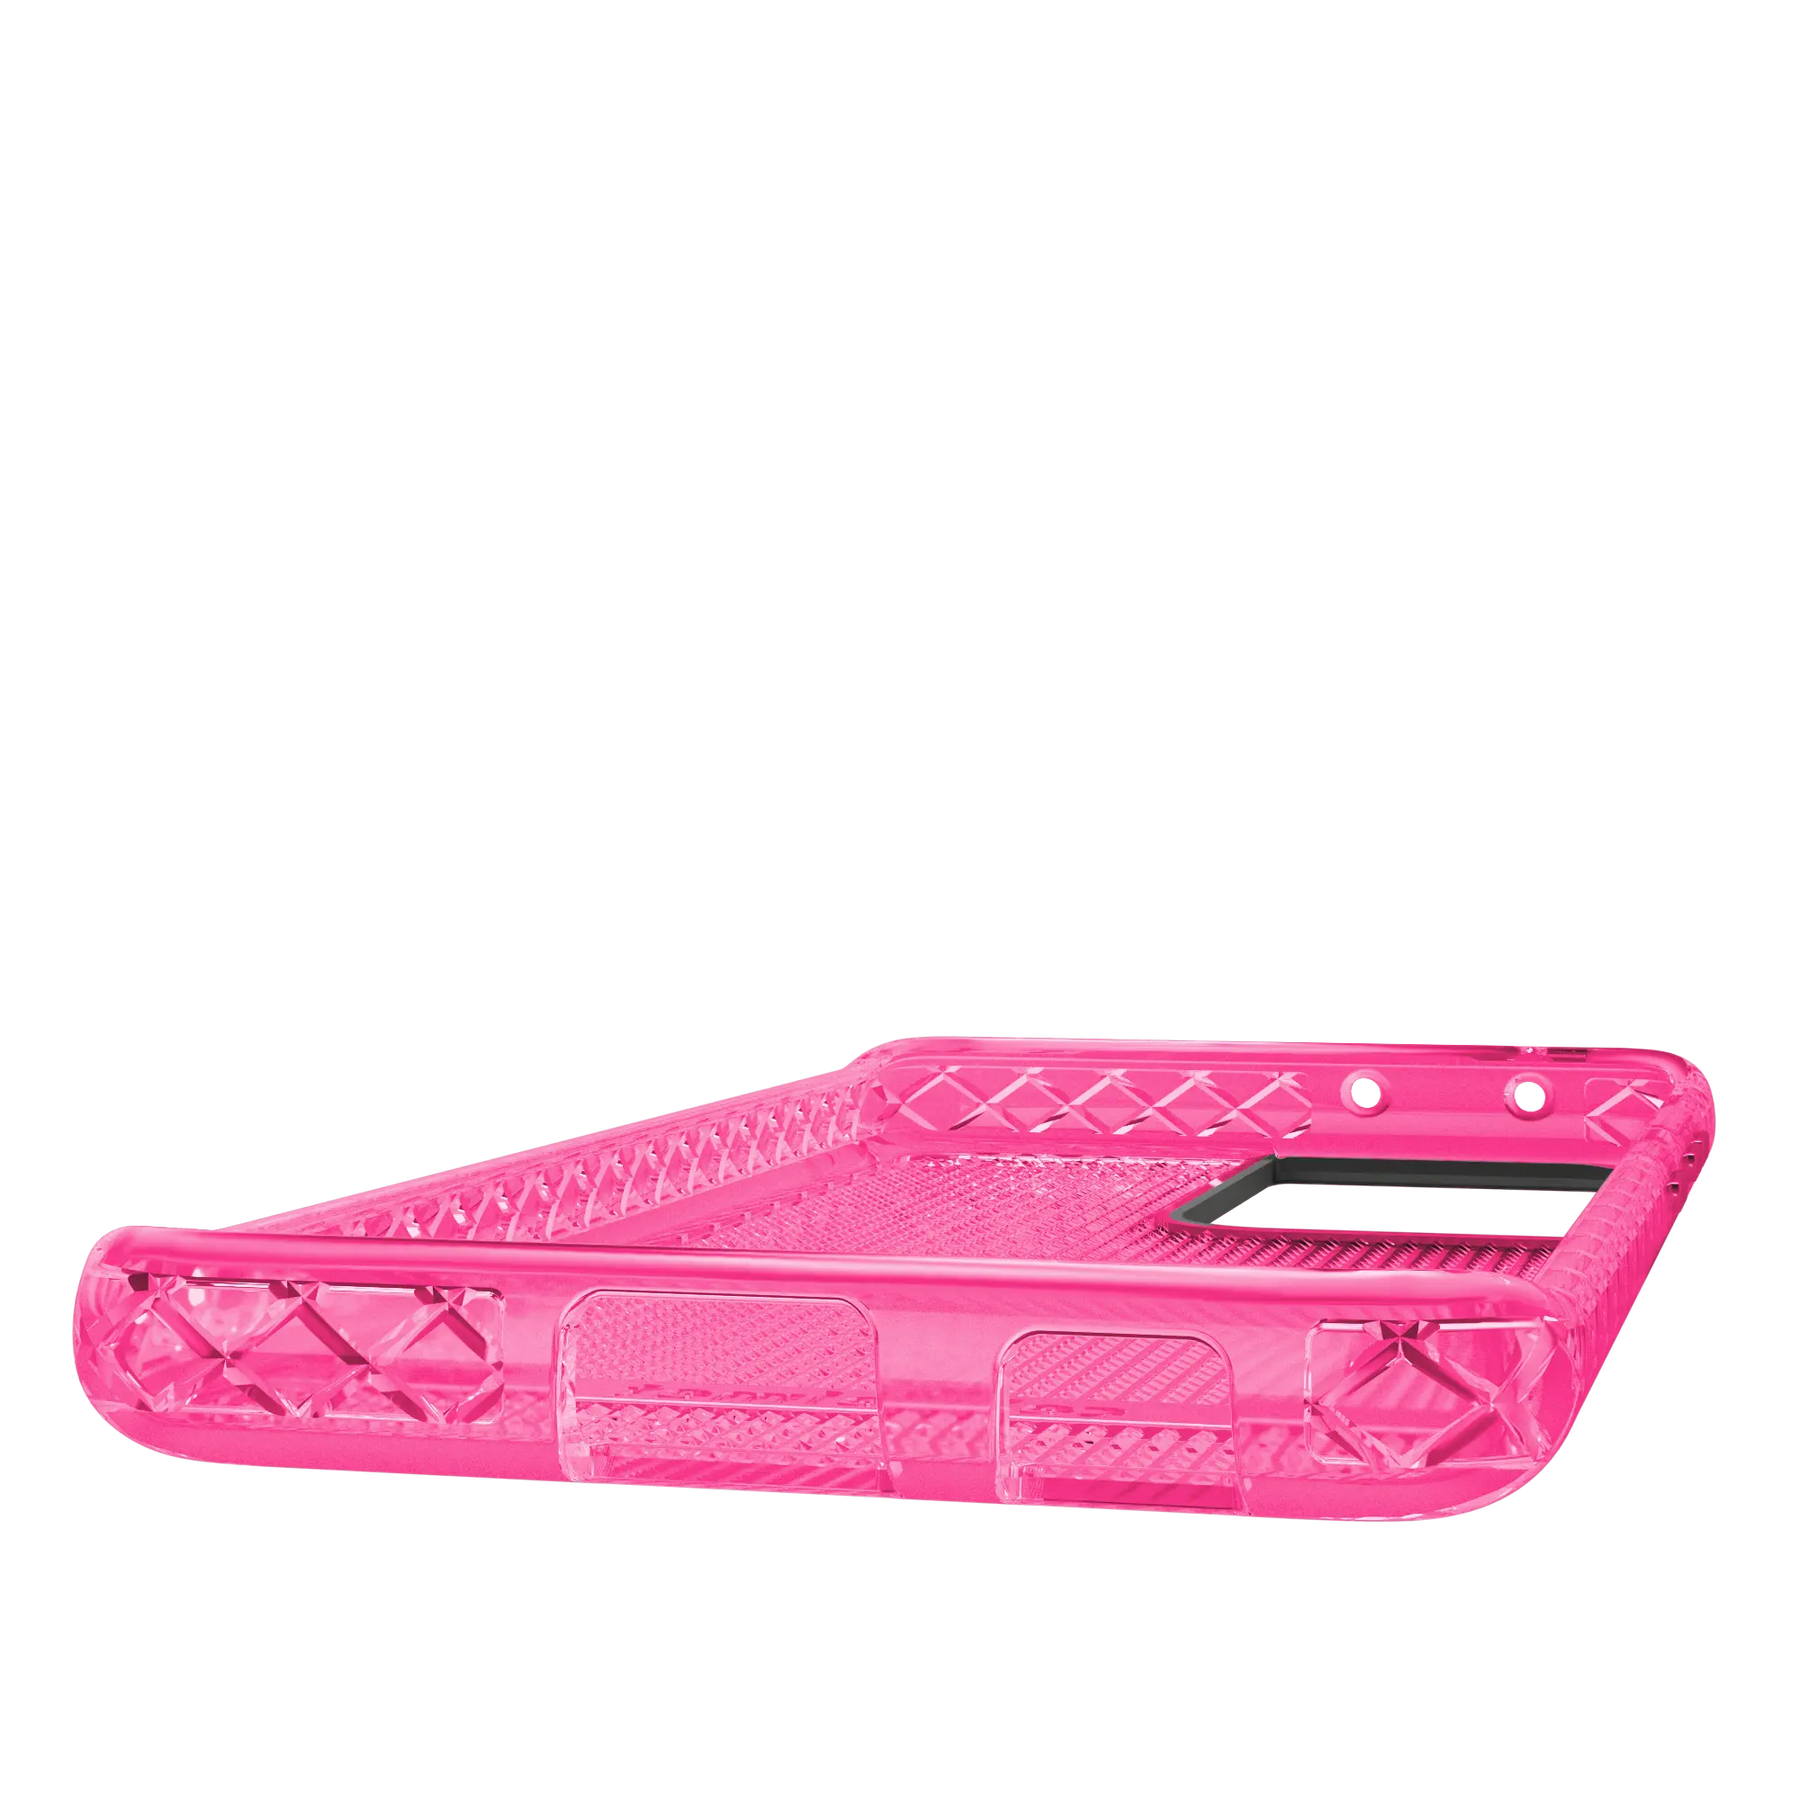 Altitude X Series for Samsung Galaxy S21 Ultra  - Pink - Case -  - cellhelmet